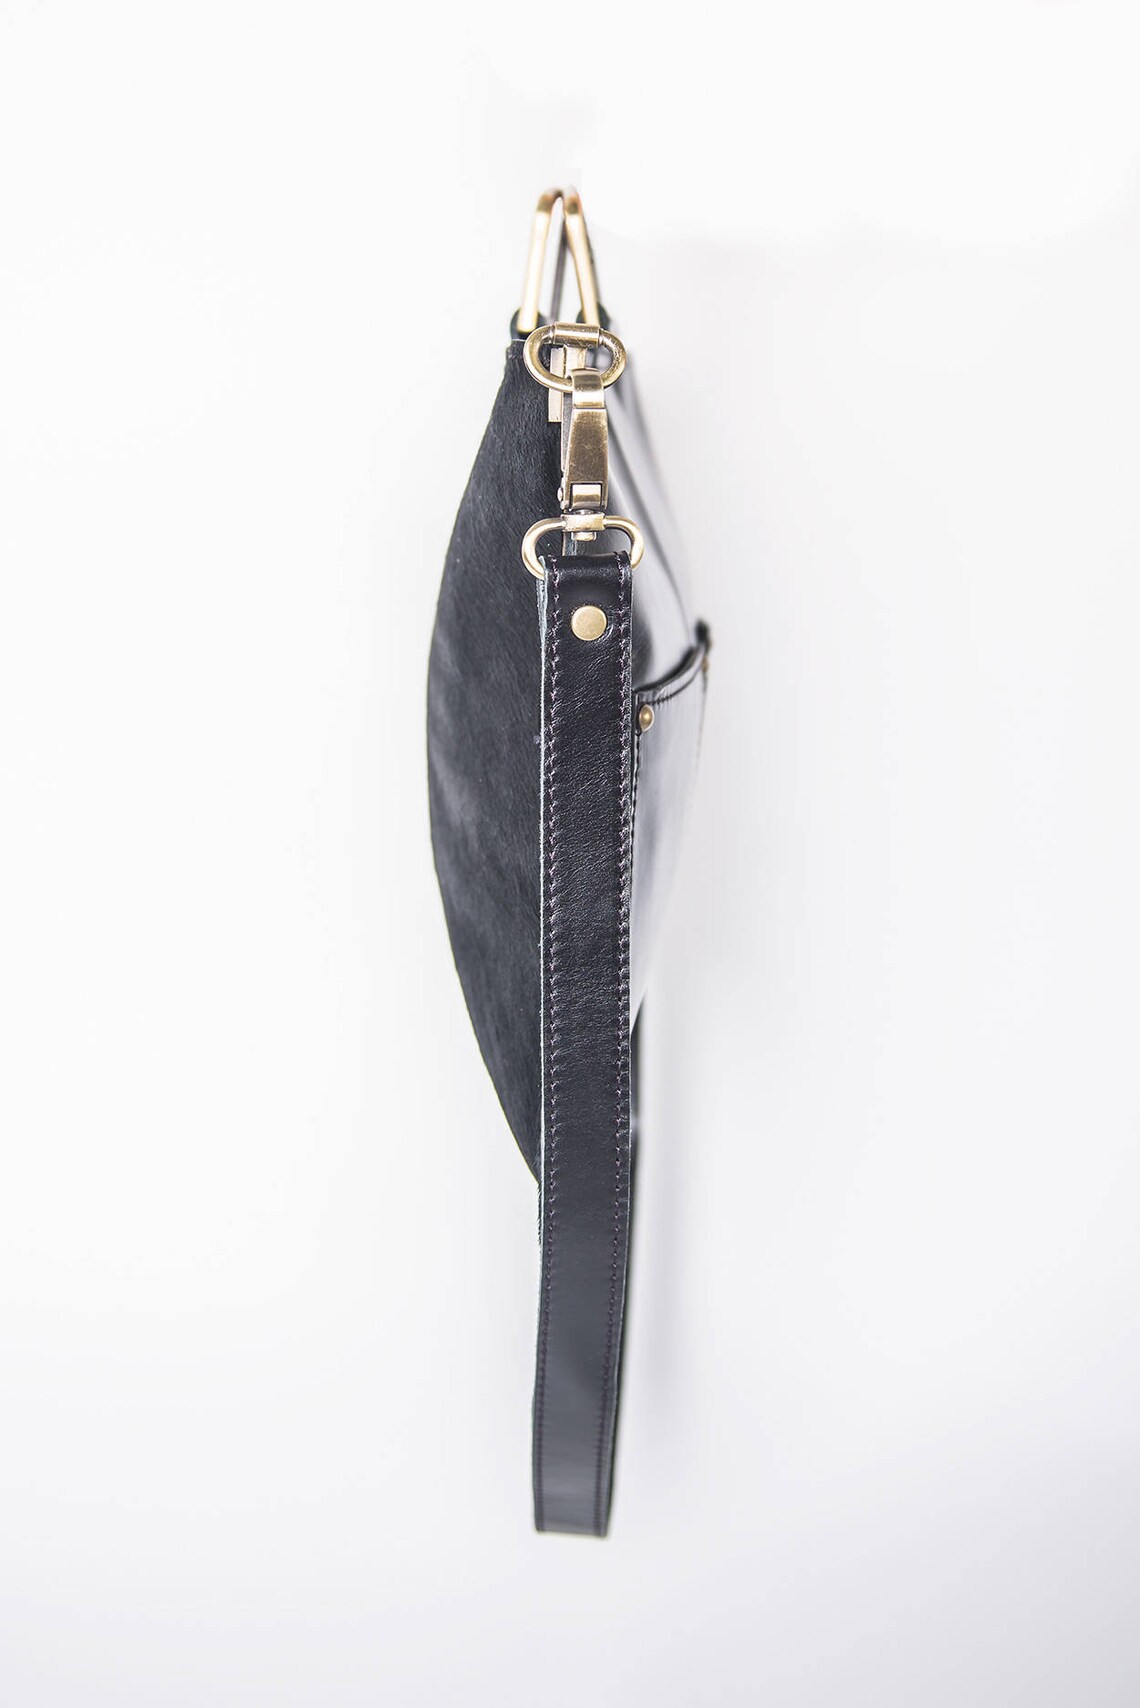 Black Leather Purses for Women Minimal Leather Bag Medium | Etsy